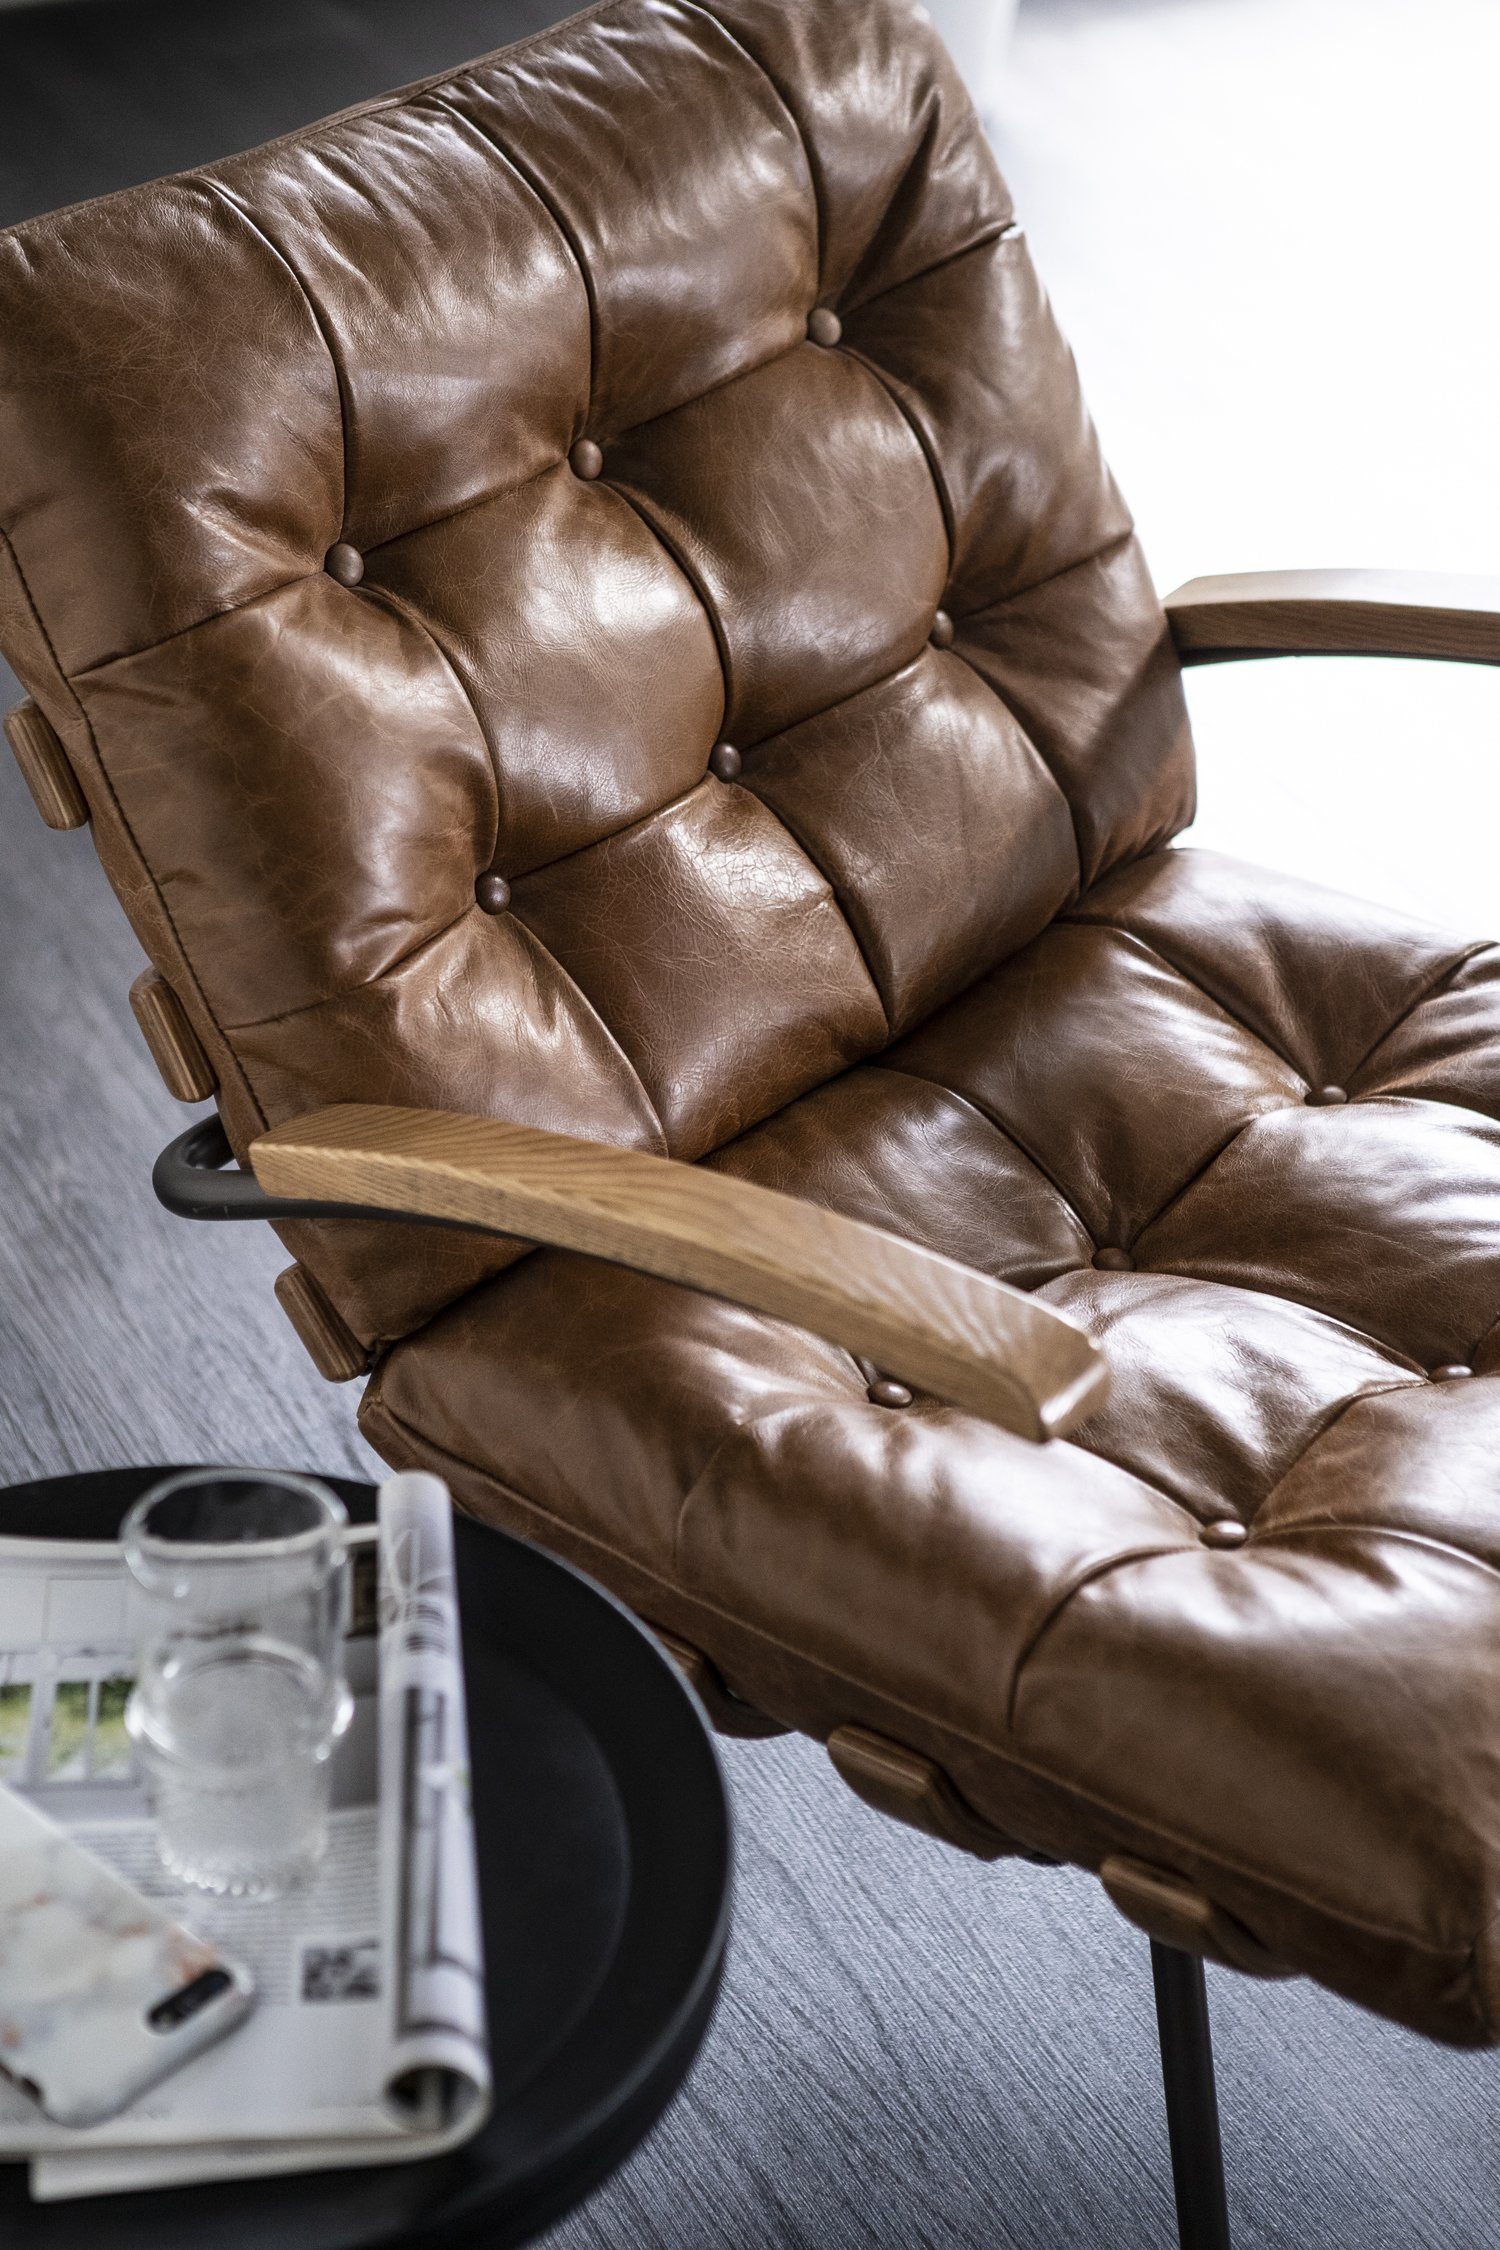 Maison ESTO Loungesessel Leder Java-Leder NICOLAS Ledersessel dunkelbraun aus Vintage, hochwertigem Sessel